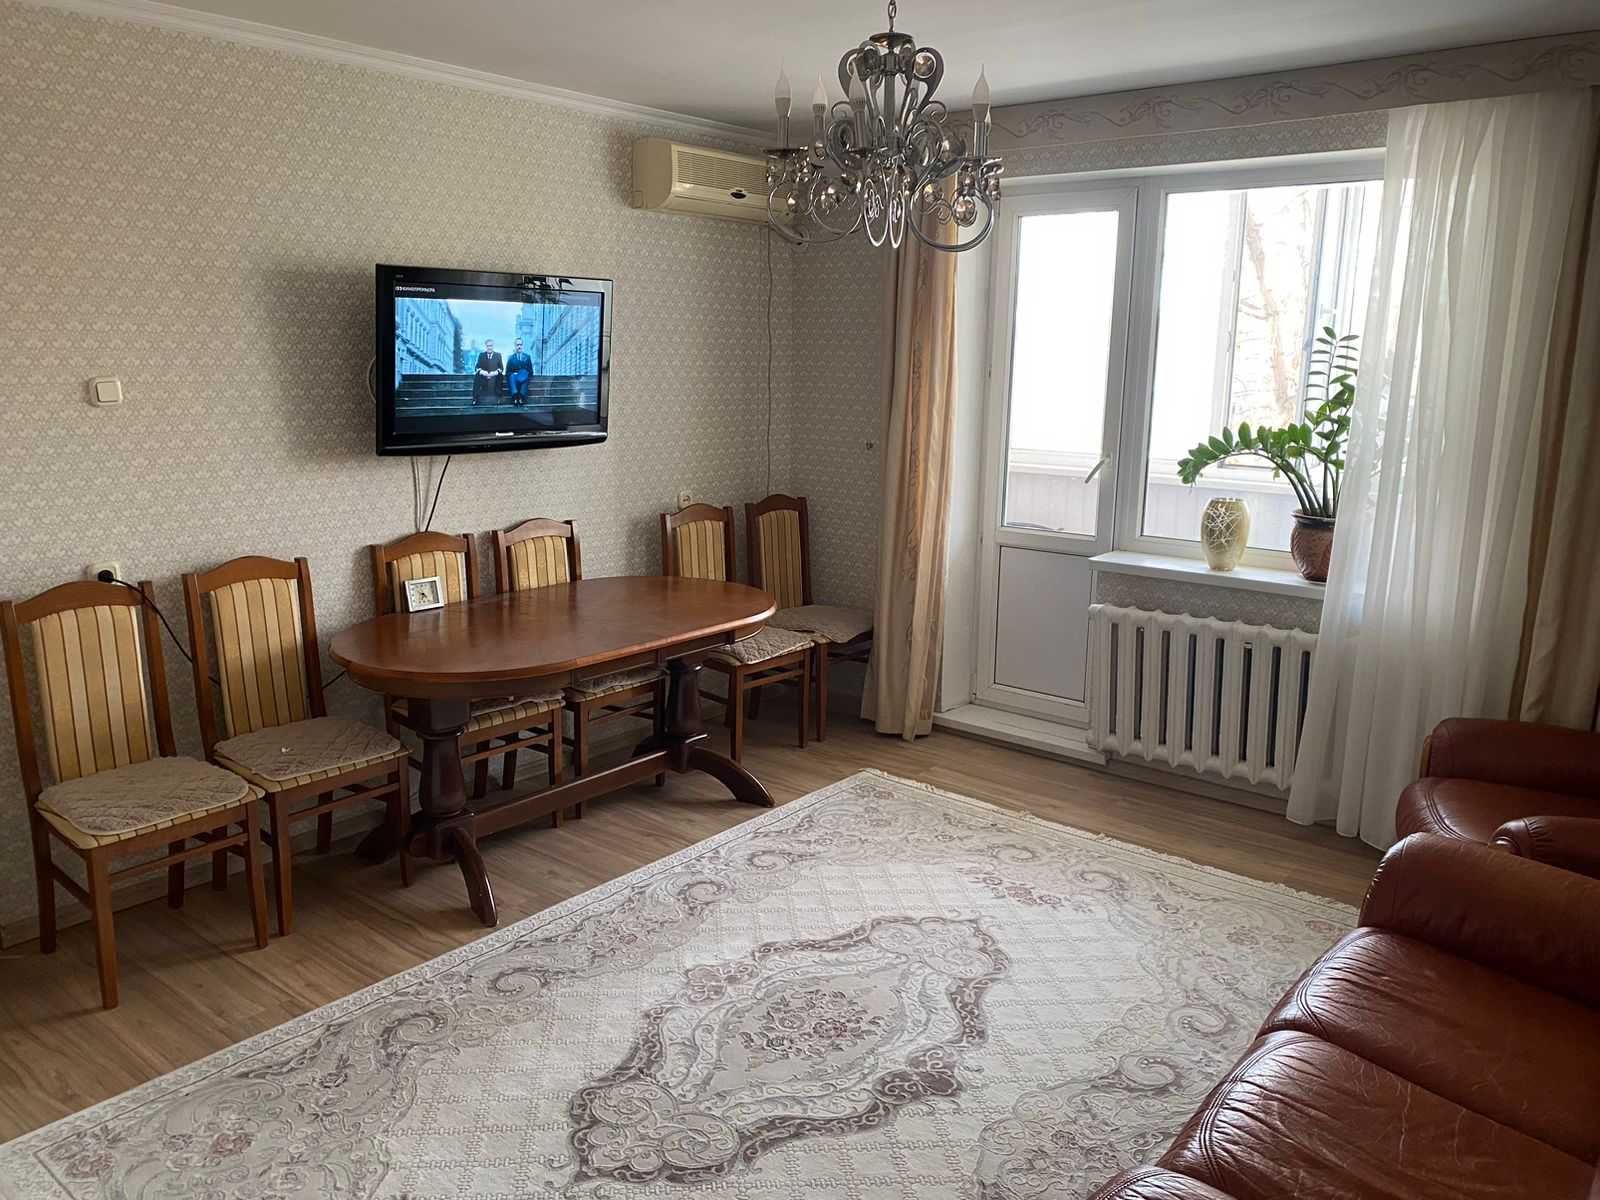 Продам 3-комнатную квартиру по ул. Алтынсарина-Павлова, центр.